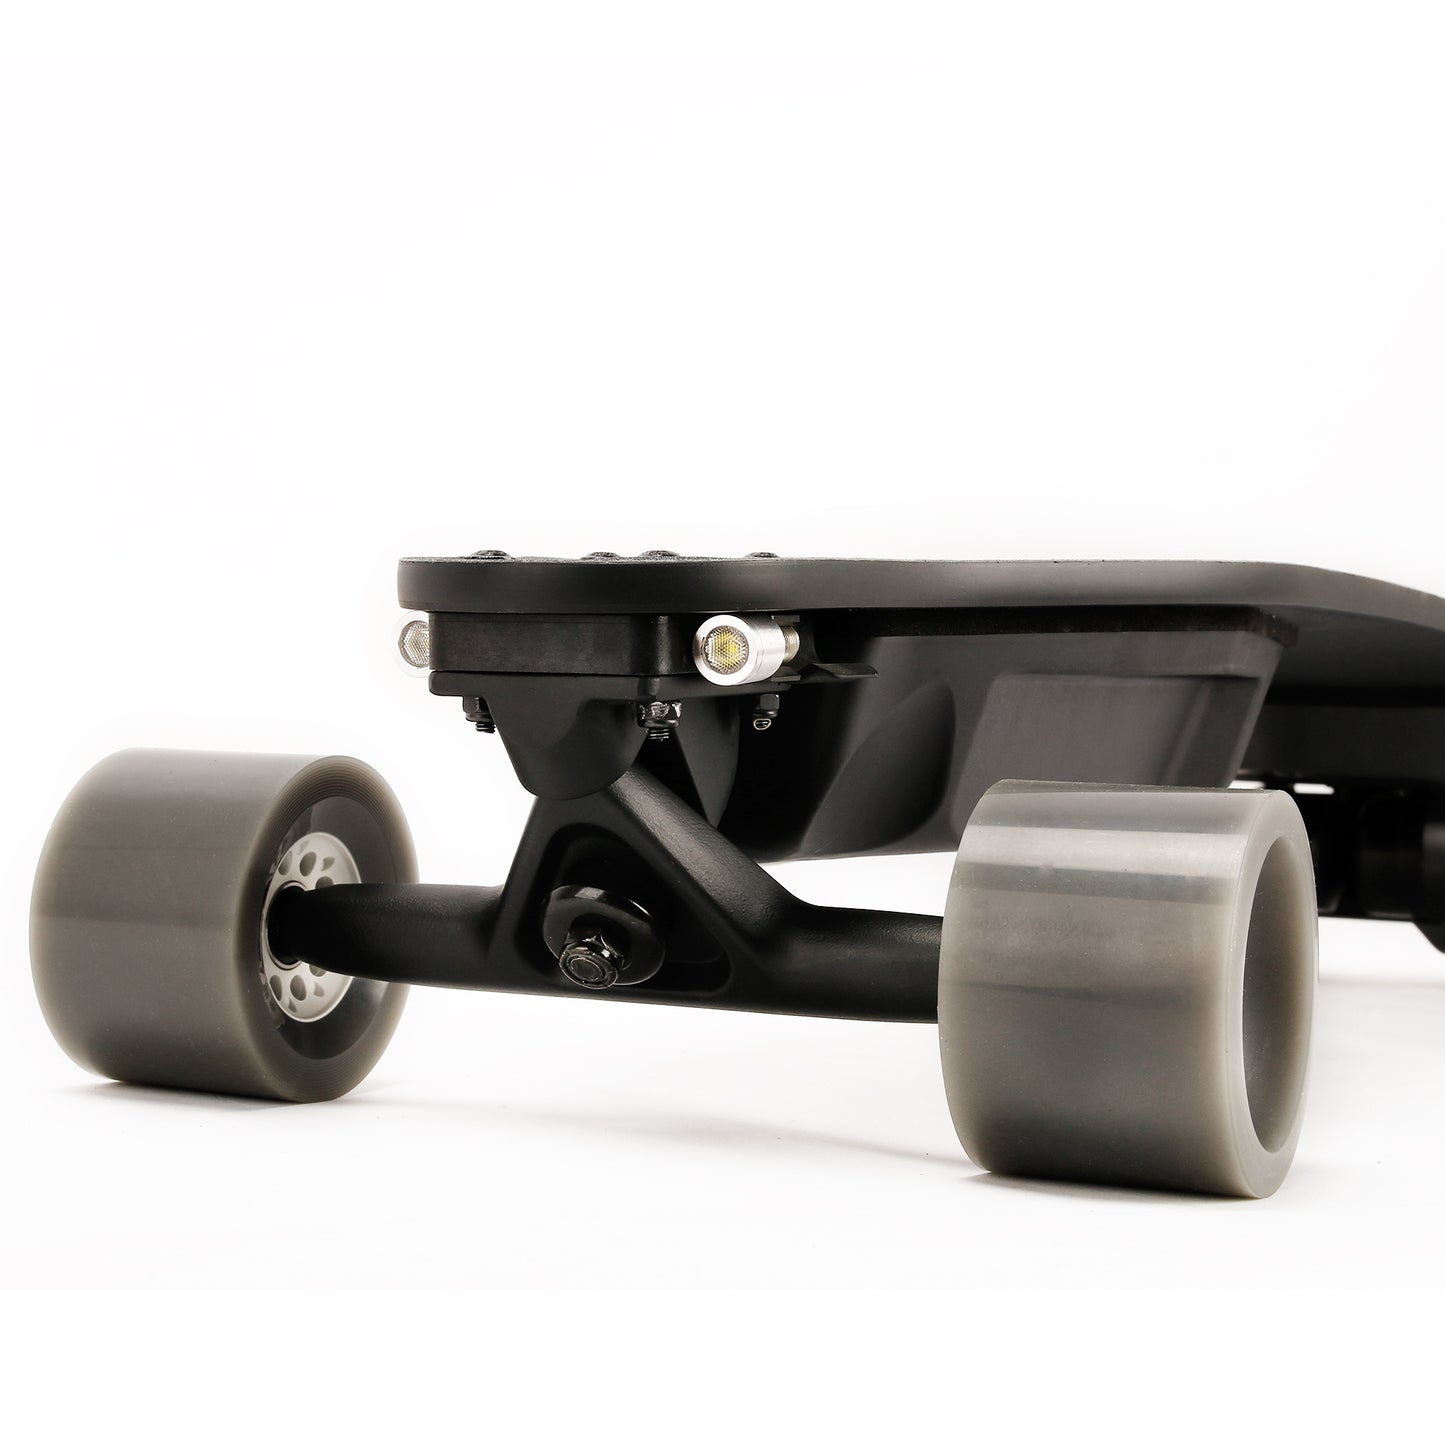 New Portable Remote Control All Terrain Longboard Electric Skateboard longboard with dual belt motors for sale